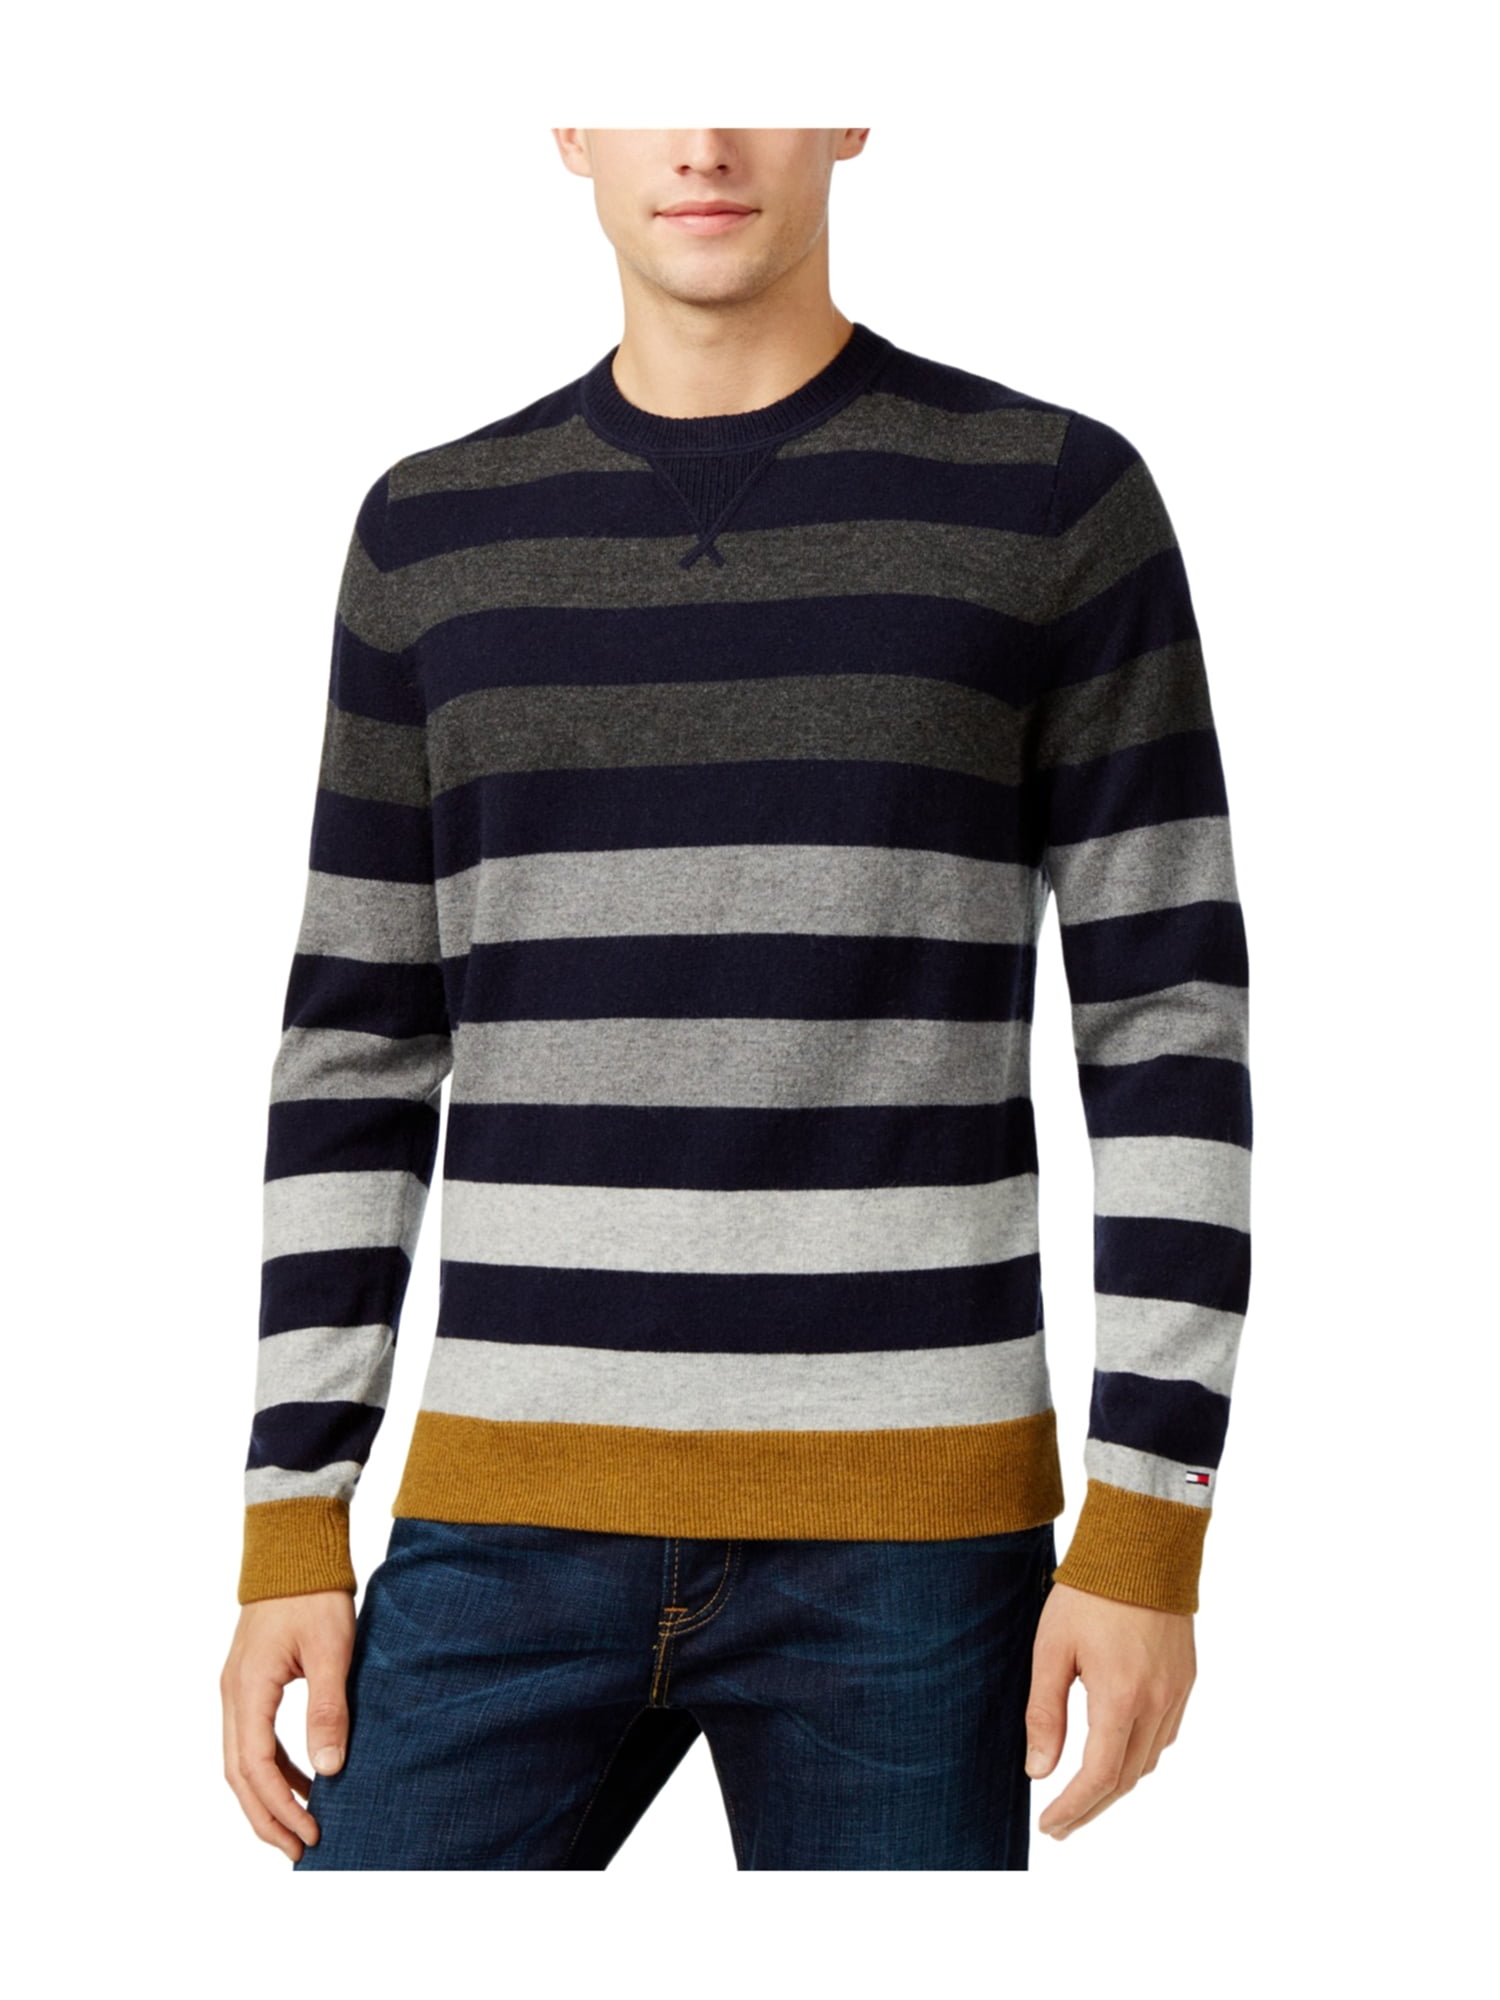 Tommy Hilfiger - Tommy Hilfiger Mens Striped Pullover Sweater multi L ...